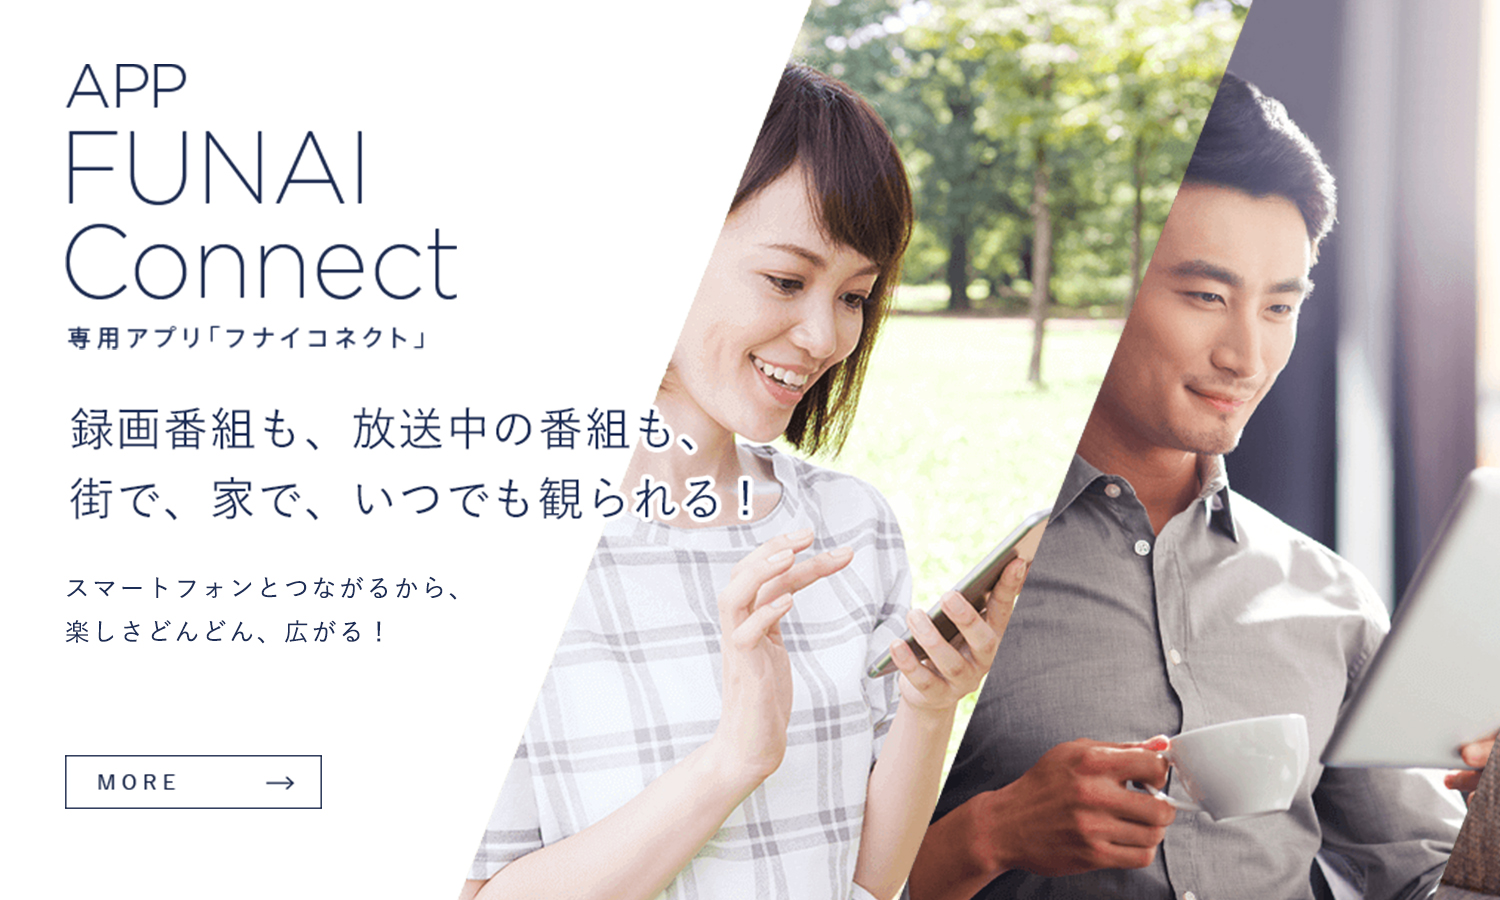 FUNAI Connect 専用アプリ「フナイコネクト」